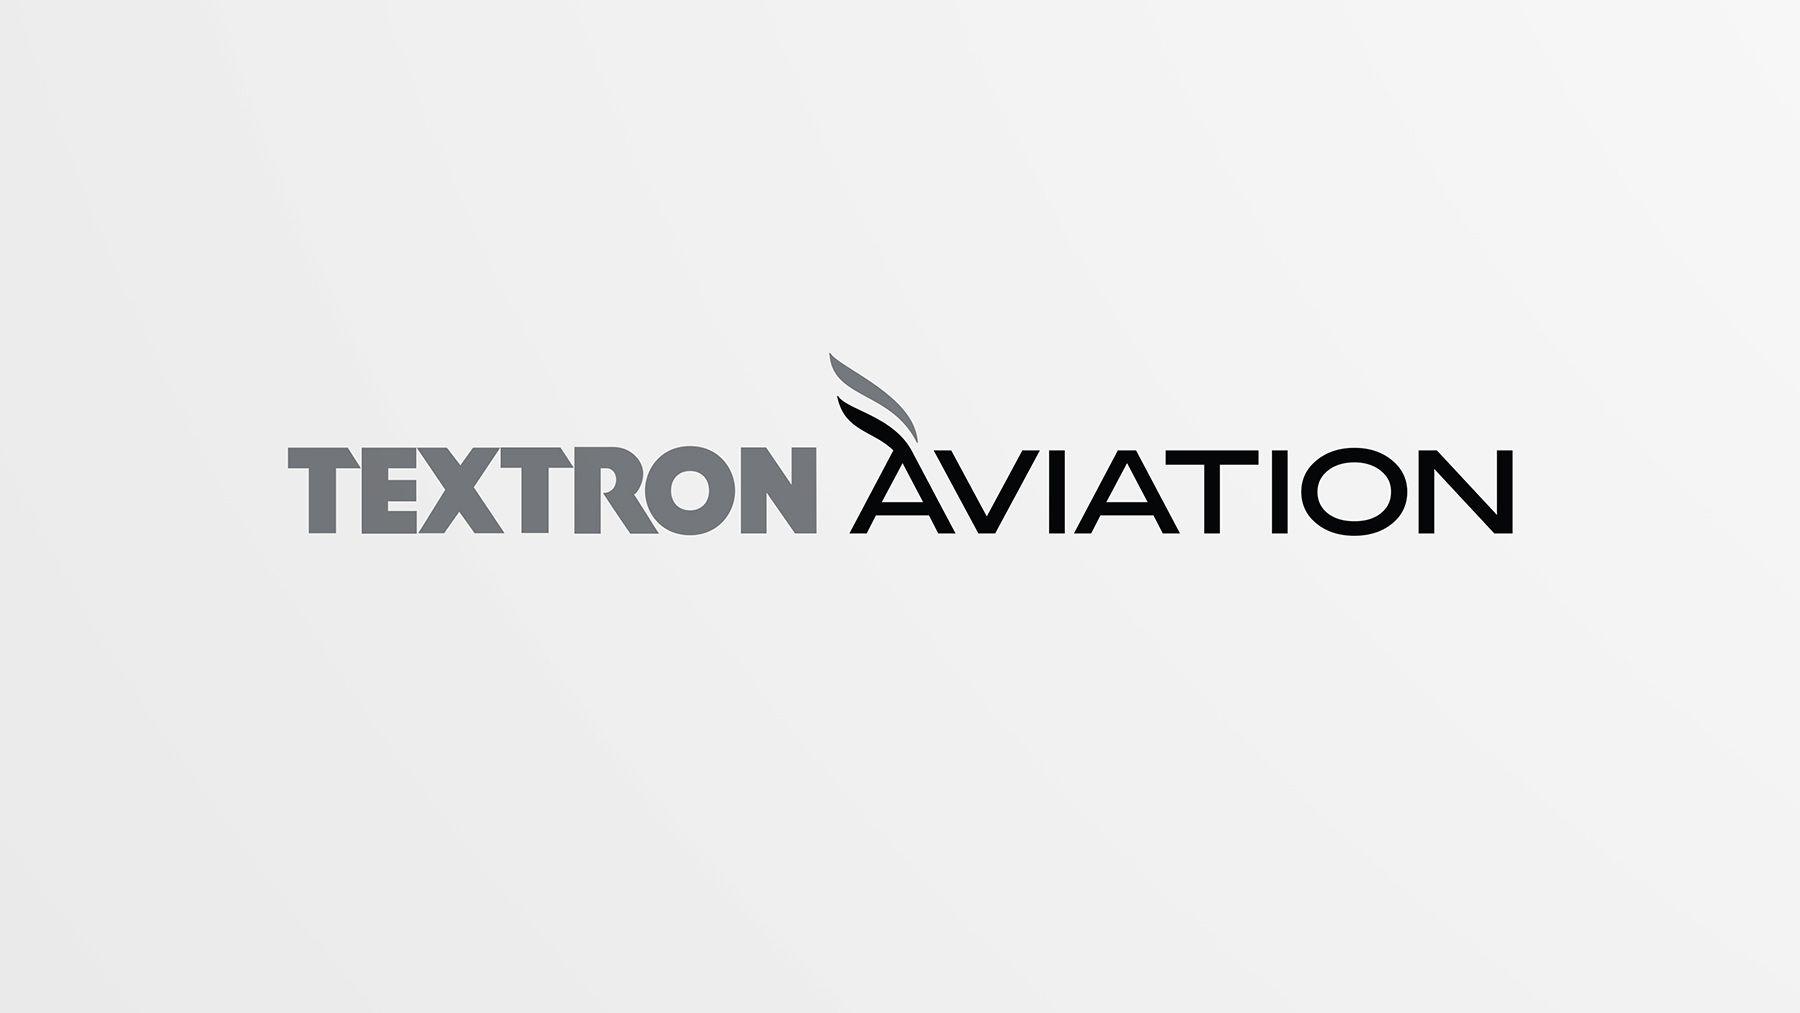 Textron Logo - Aviation Branding, Web Design, Identity | Jajo Work